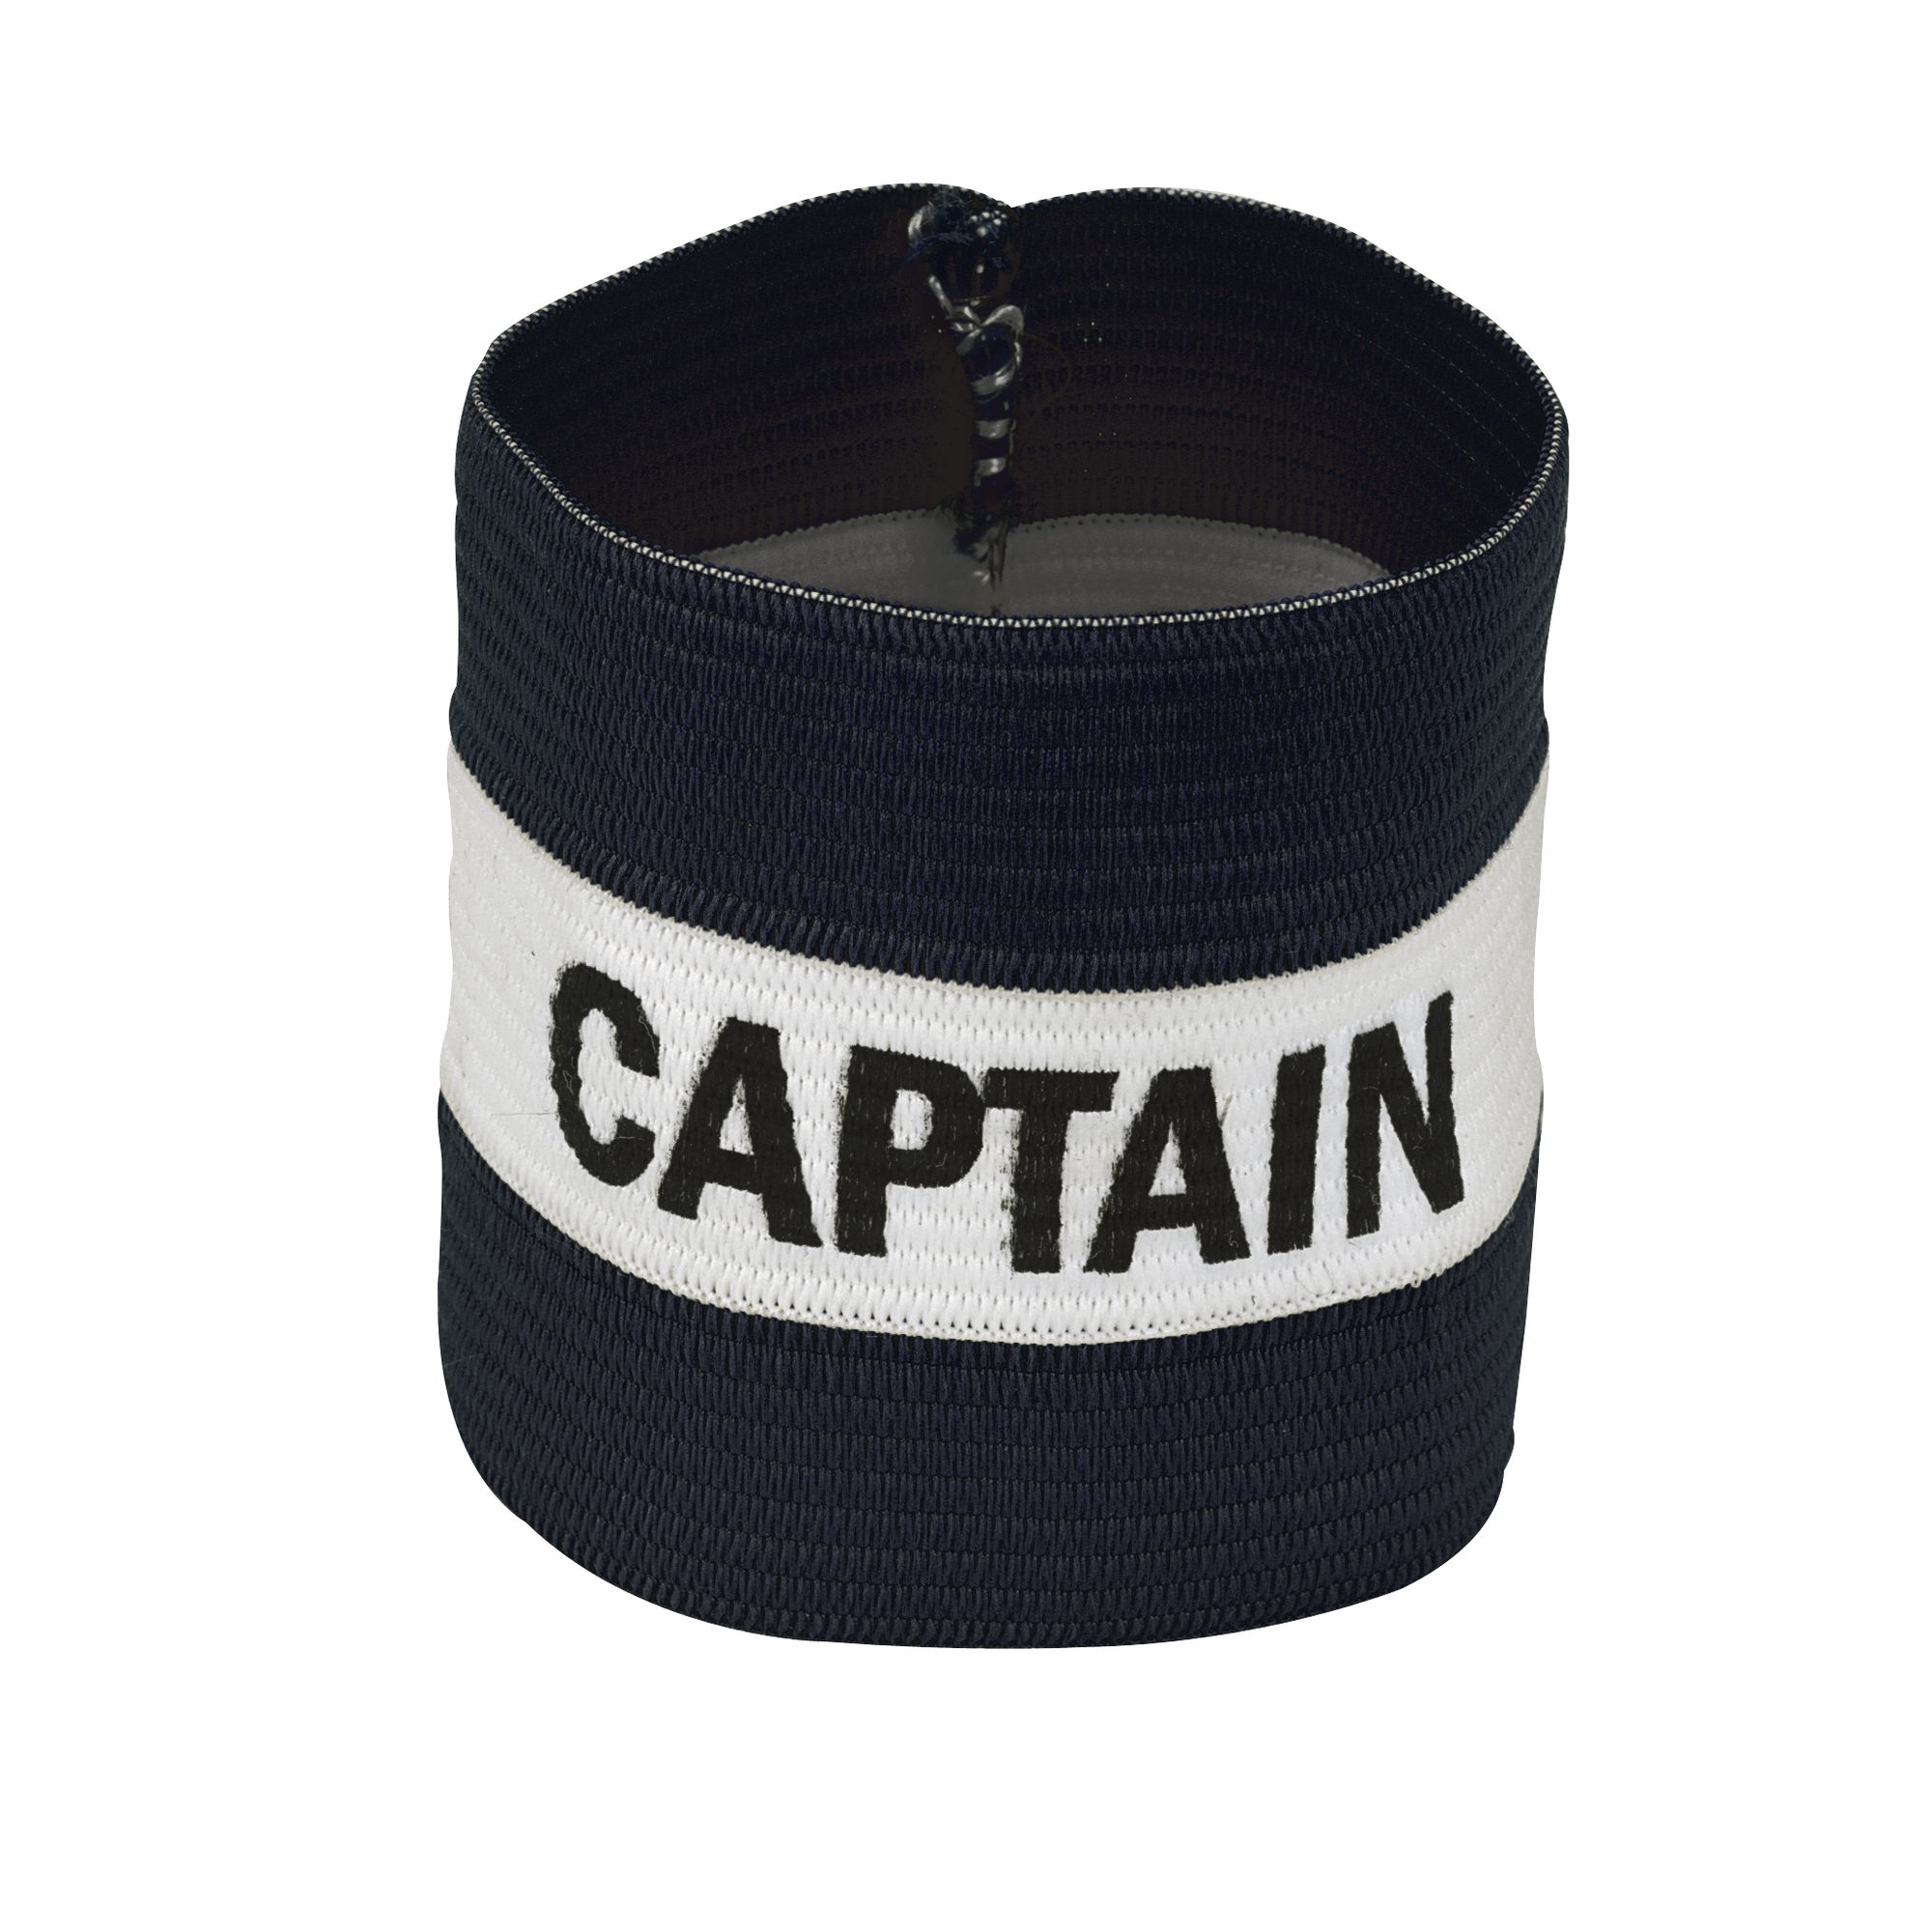 Precision Captains Armband - Adult